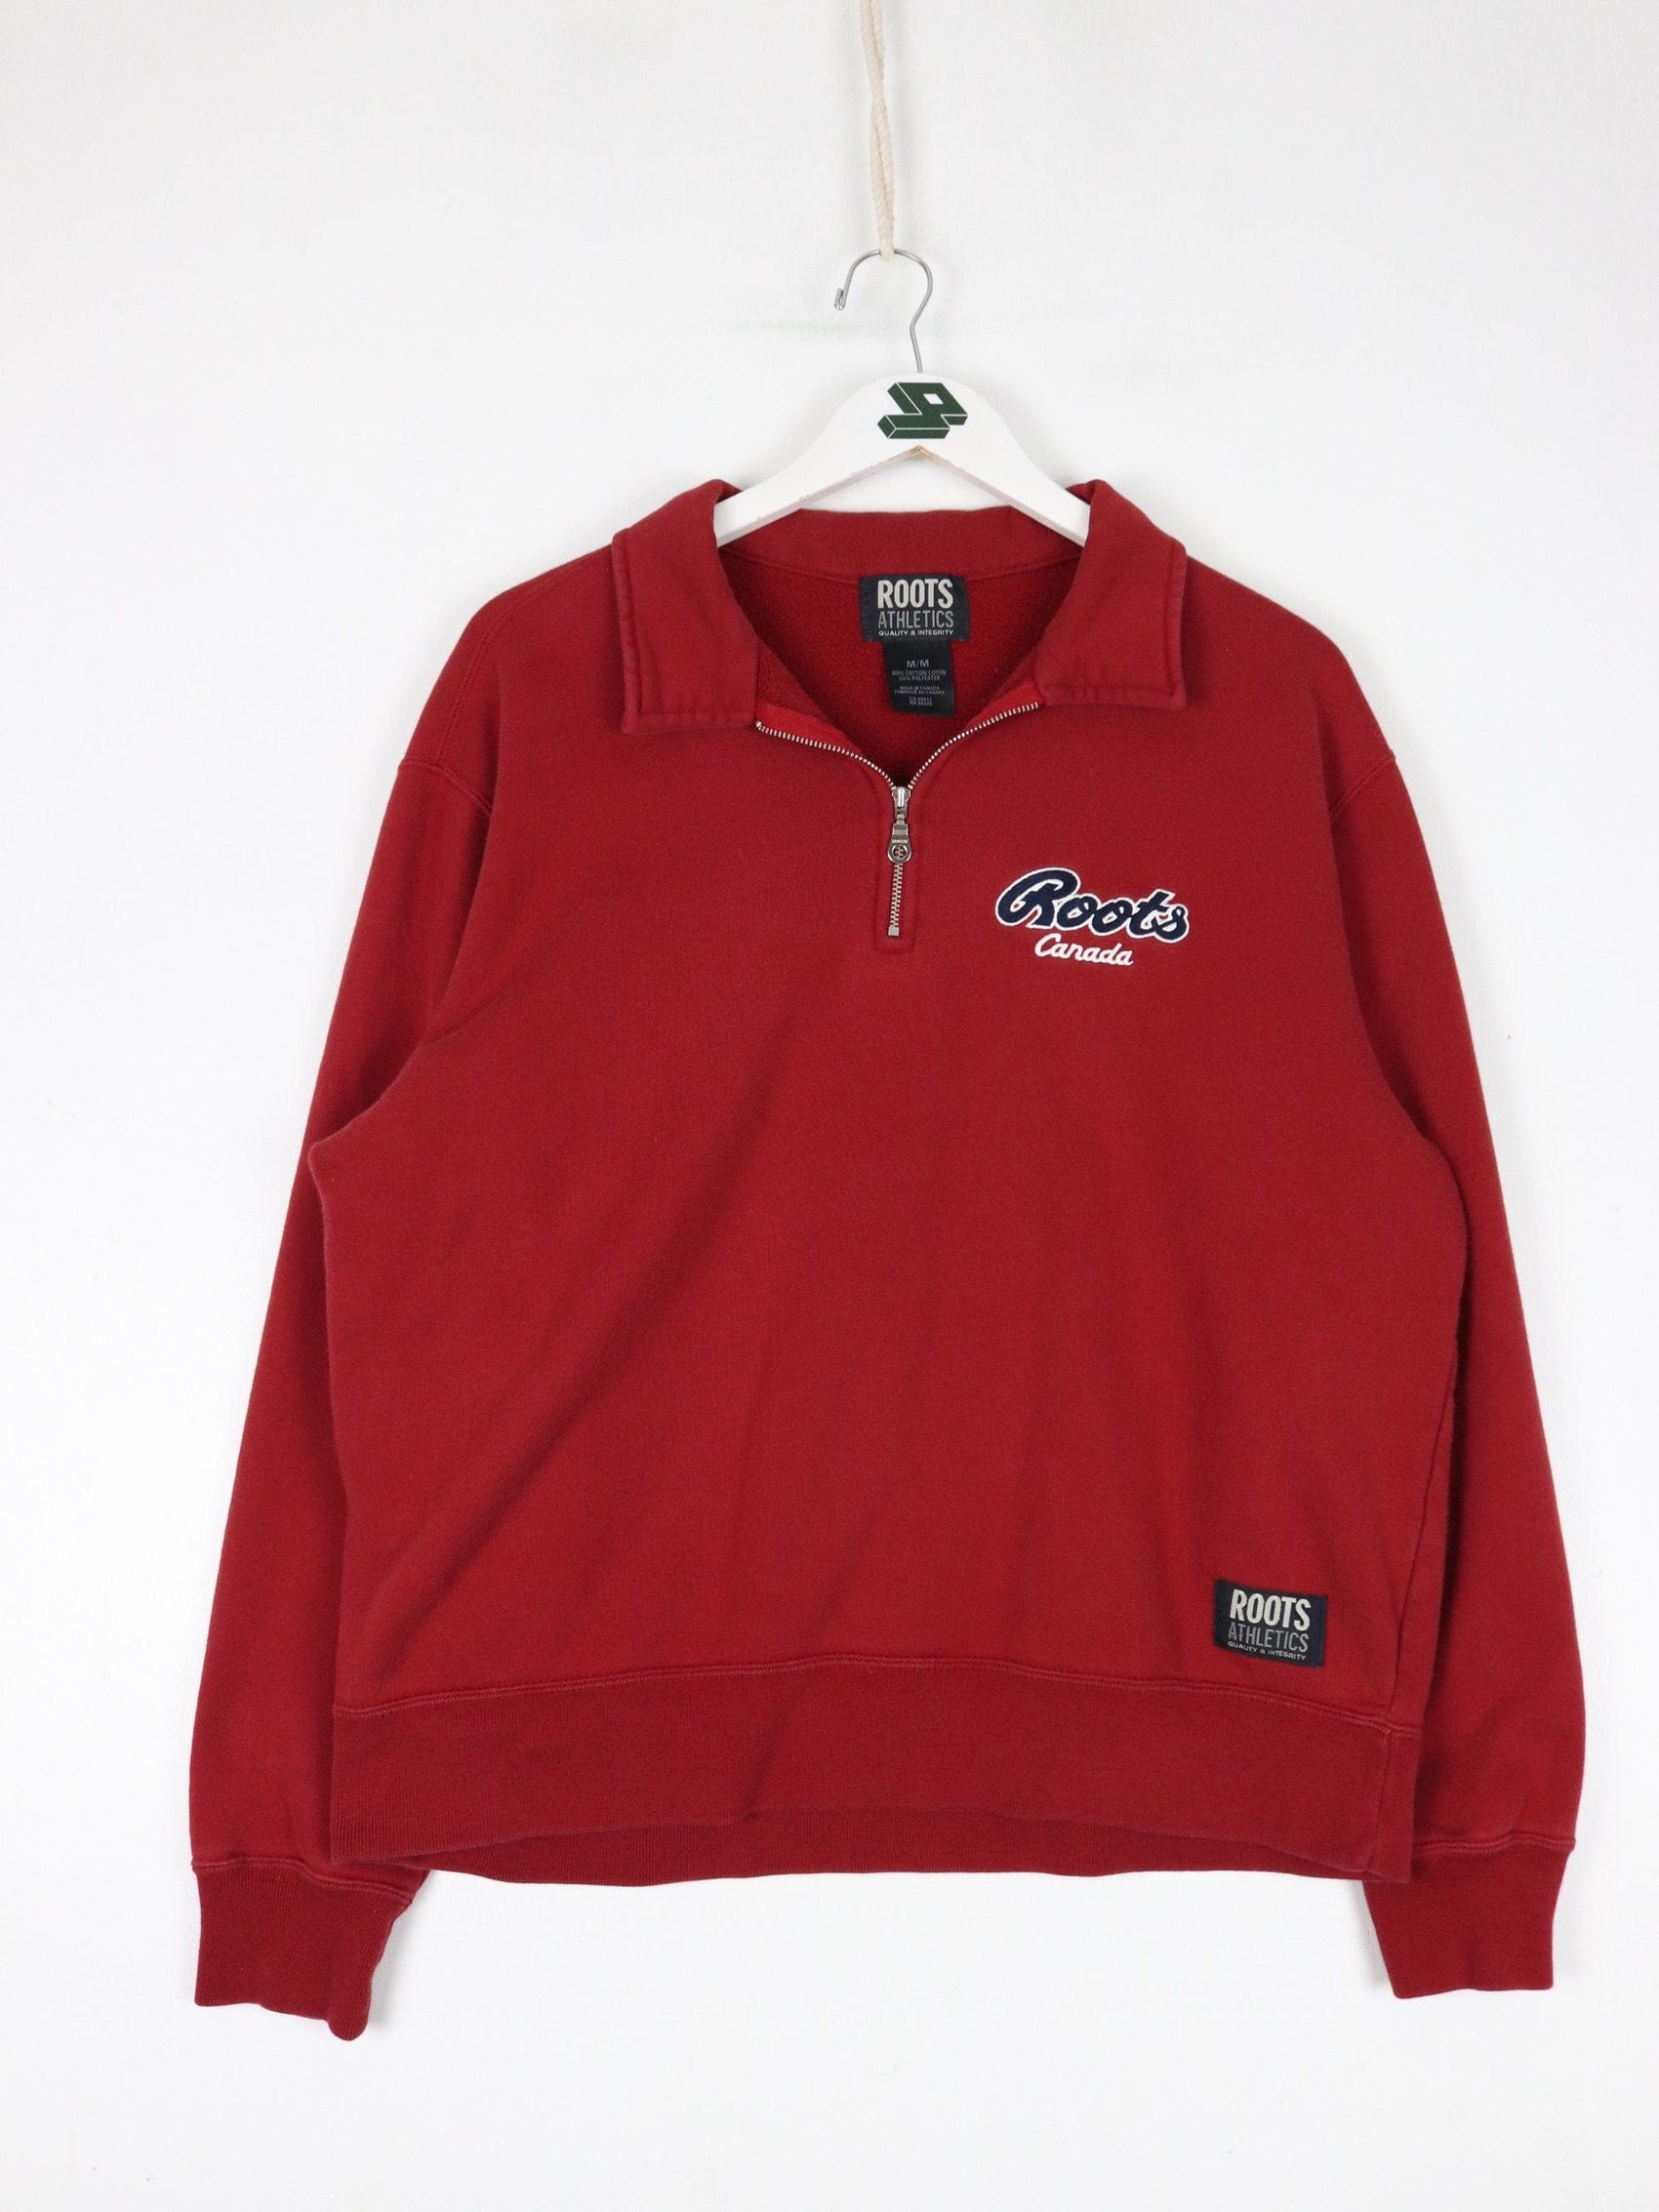 Roots Sweatshirts & Hoodies Vintage Roots Sweatshirt Mens Medium Red Quarter Zip